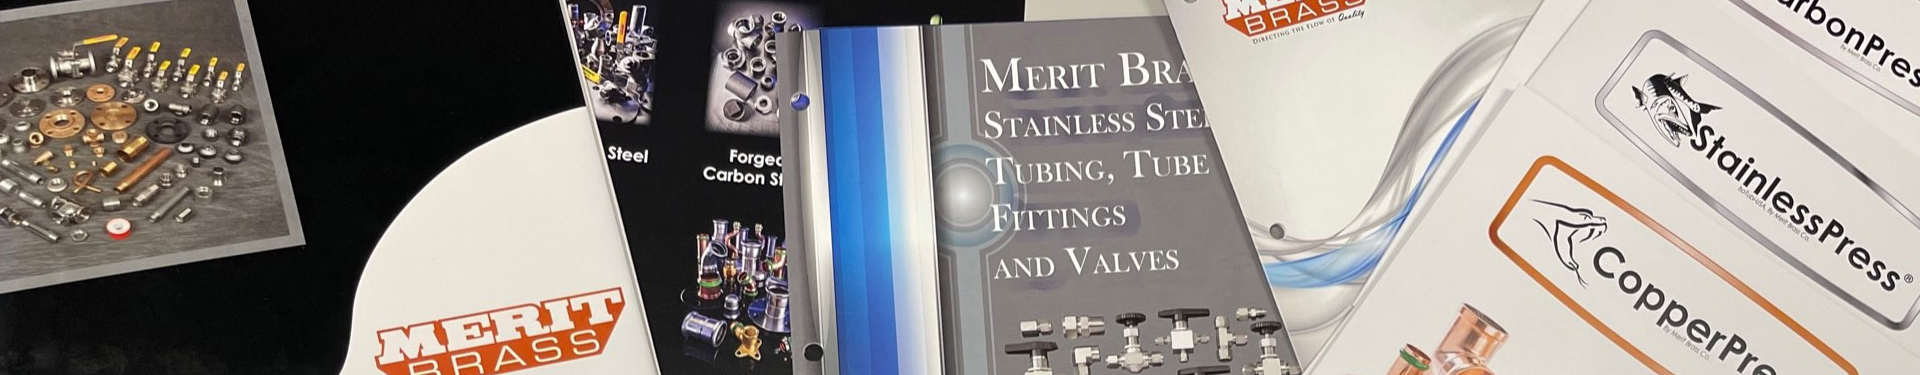 Merit Brass - Brass Pipe Union: 1″ Fitting, Threaded, FNPT x FNPT, Class  125 - 02202935 - MSC Industrial Supply